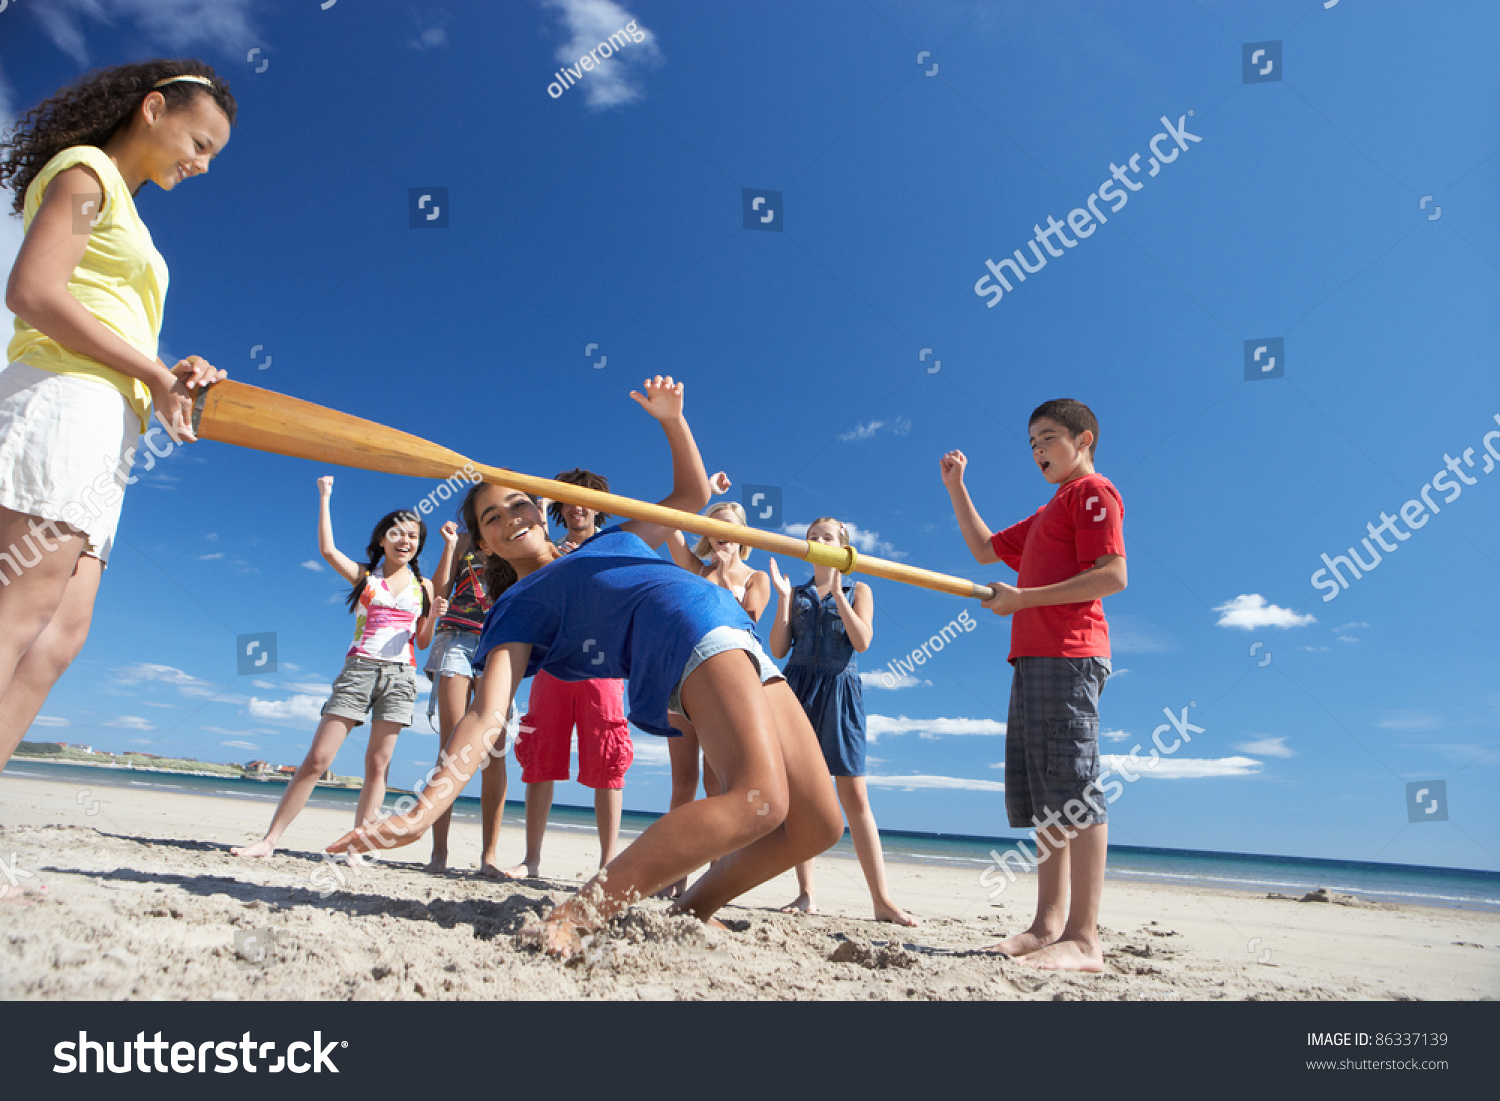 stock-photo-teenagers-doing-limbo-dance-on-beach-86337139.jpg